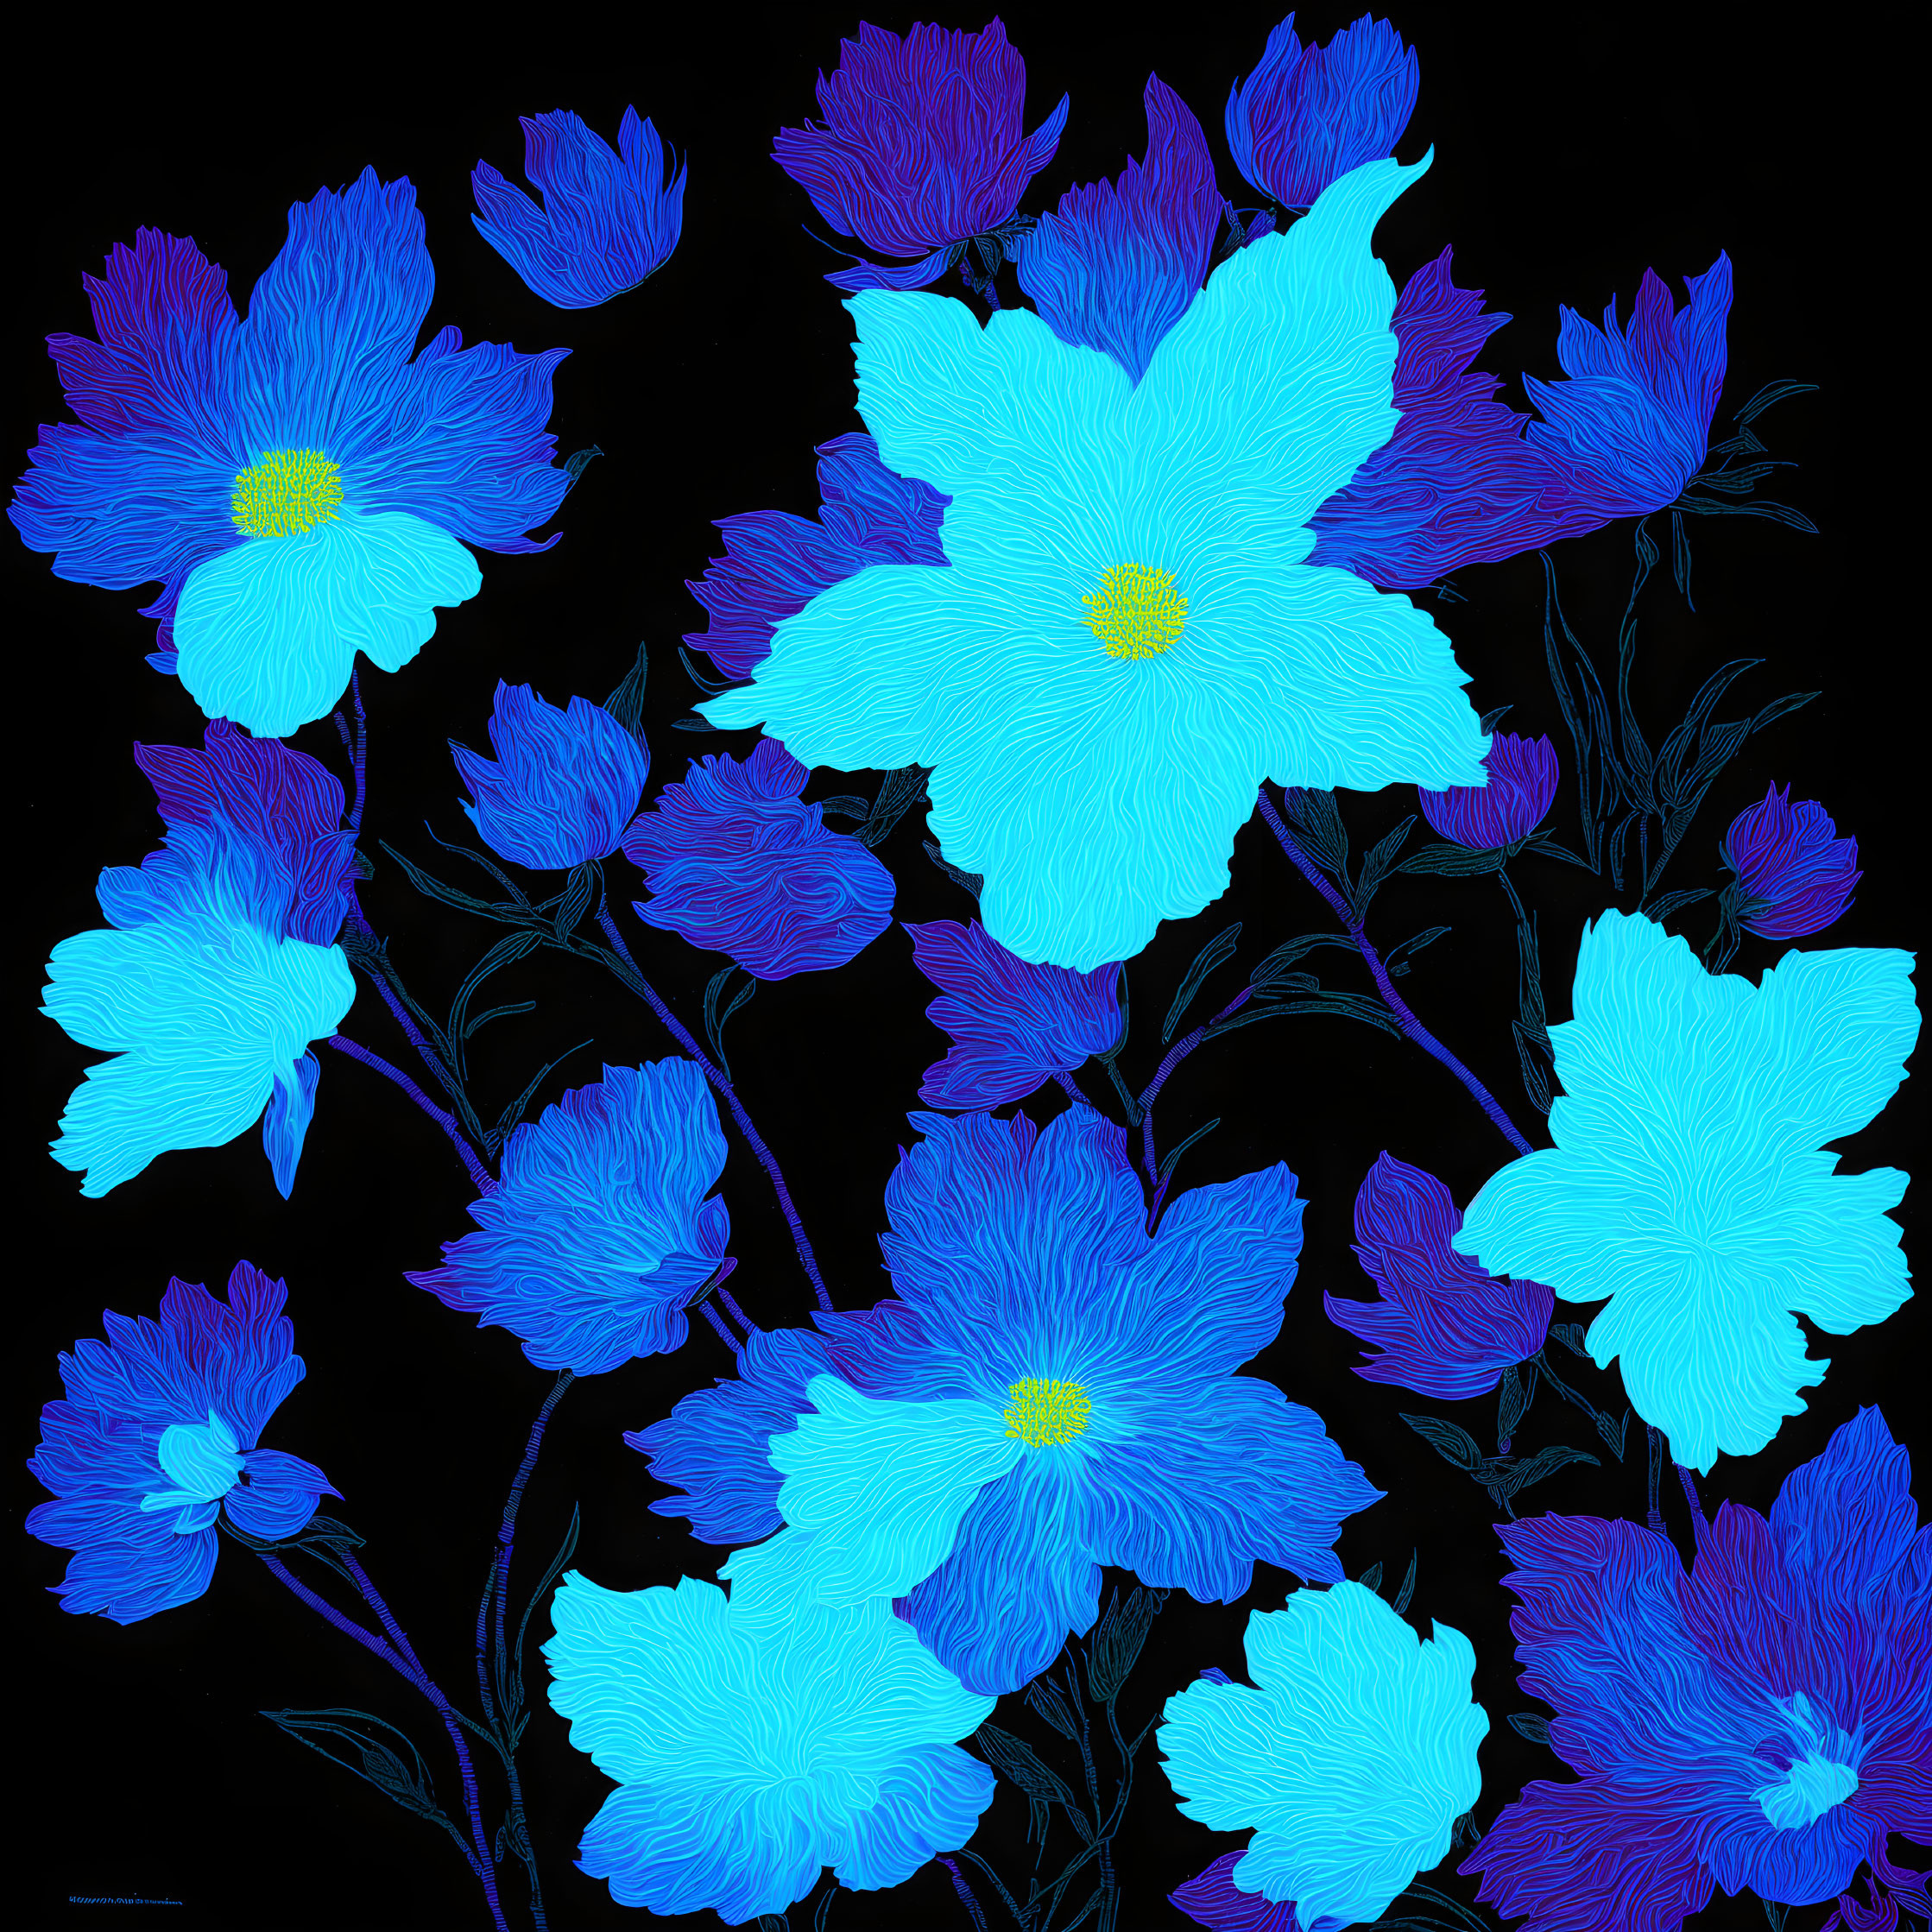 Detailed Neon Blue and Purple Flower Illustration on Black Background